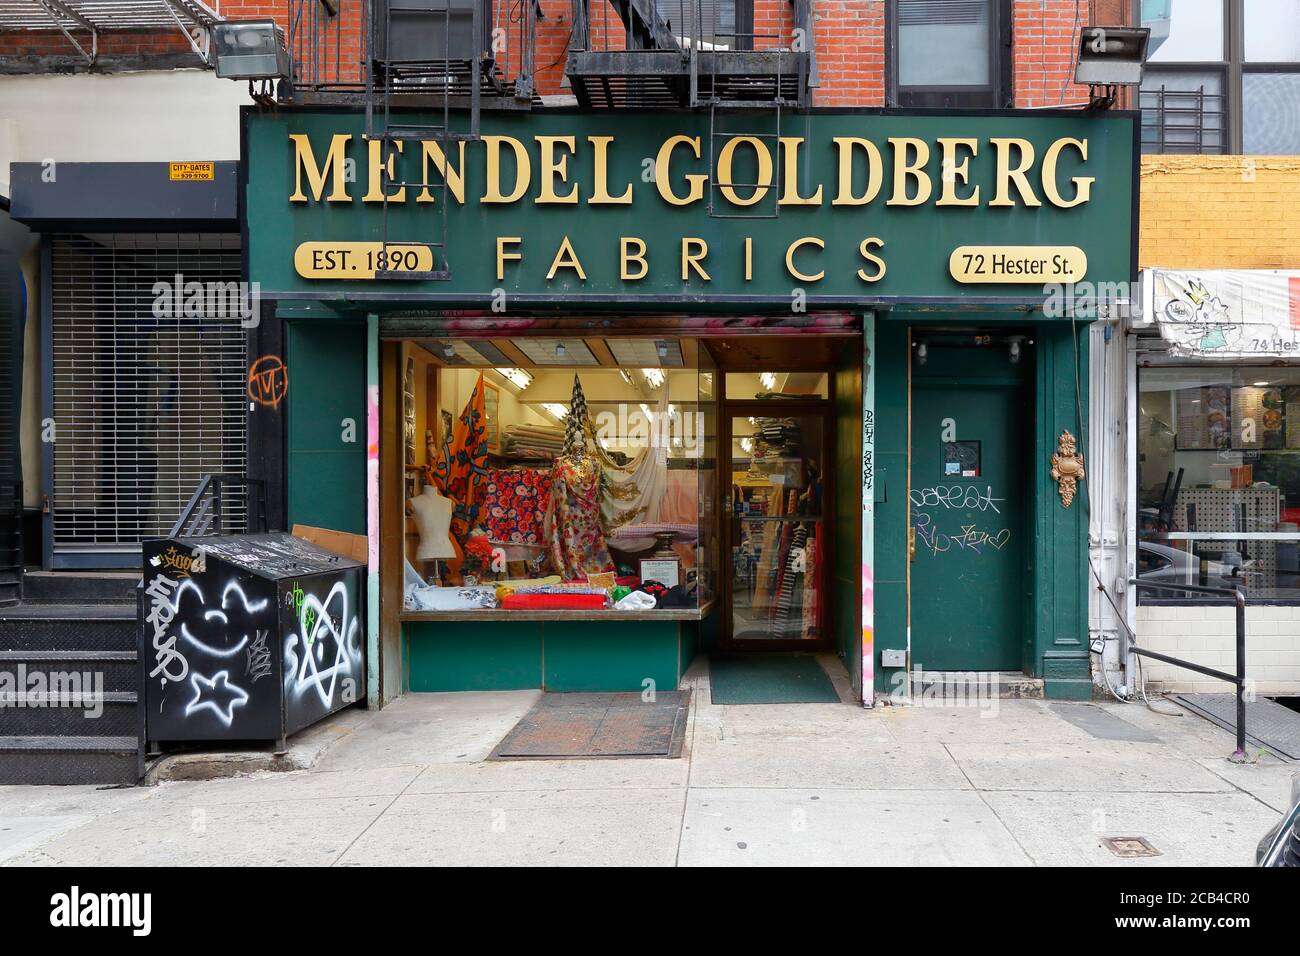 Mendel Goldberg Fabrics, 72 Hester St, New York, NYC storefront photo of a fabric store in Manhattan's Lower East Side neighborhood. Stock Photo